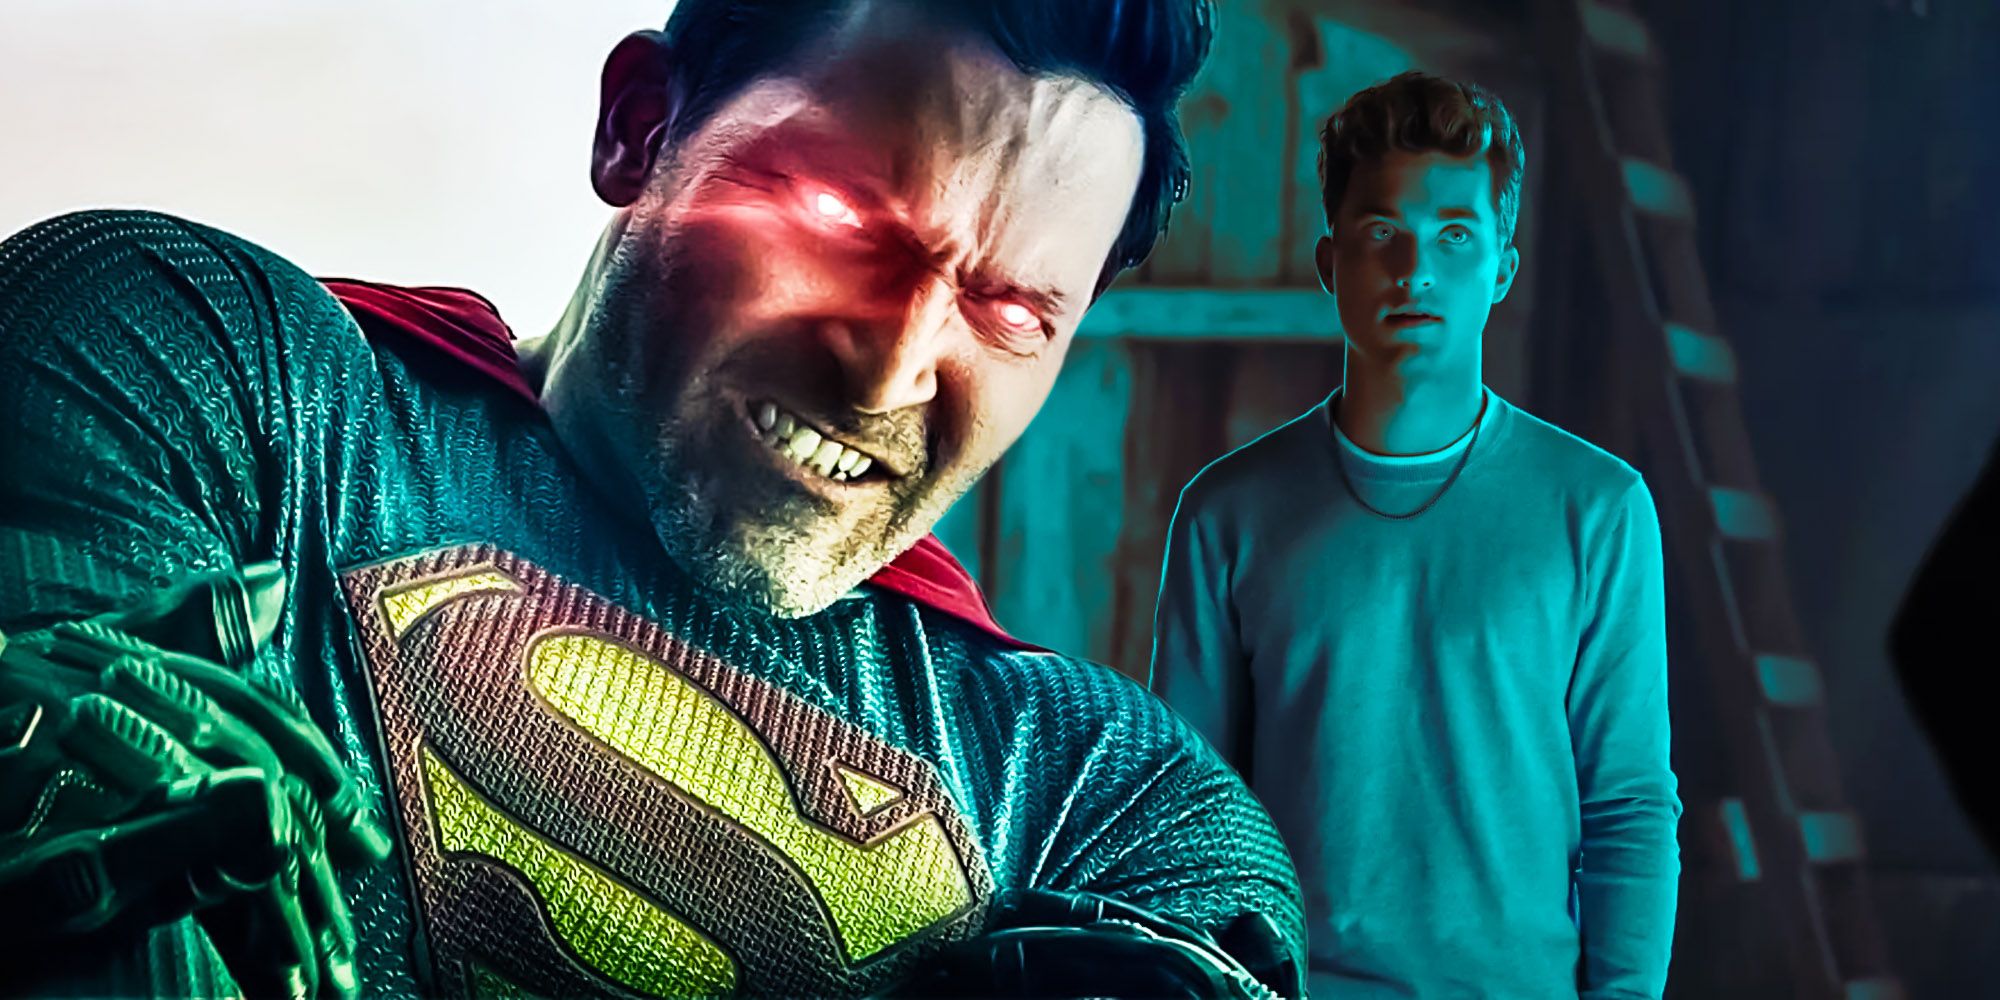 Superman and lois season 2 jonathan Kent powers set up biggest arrowverse challenge